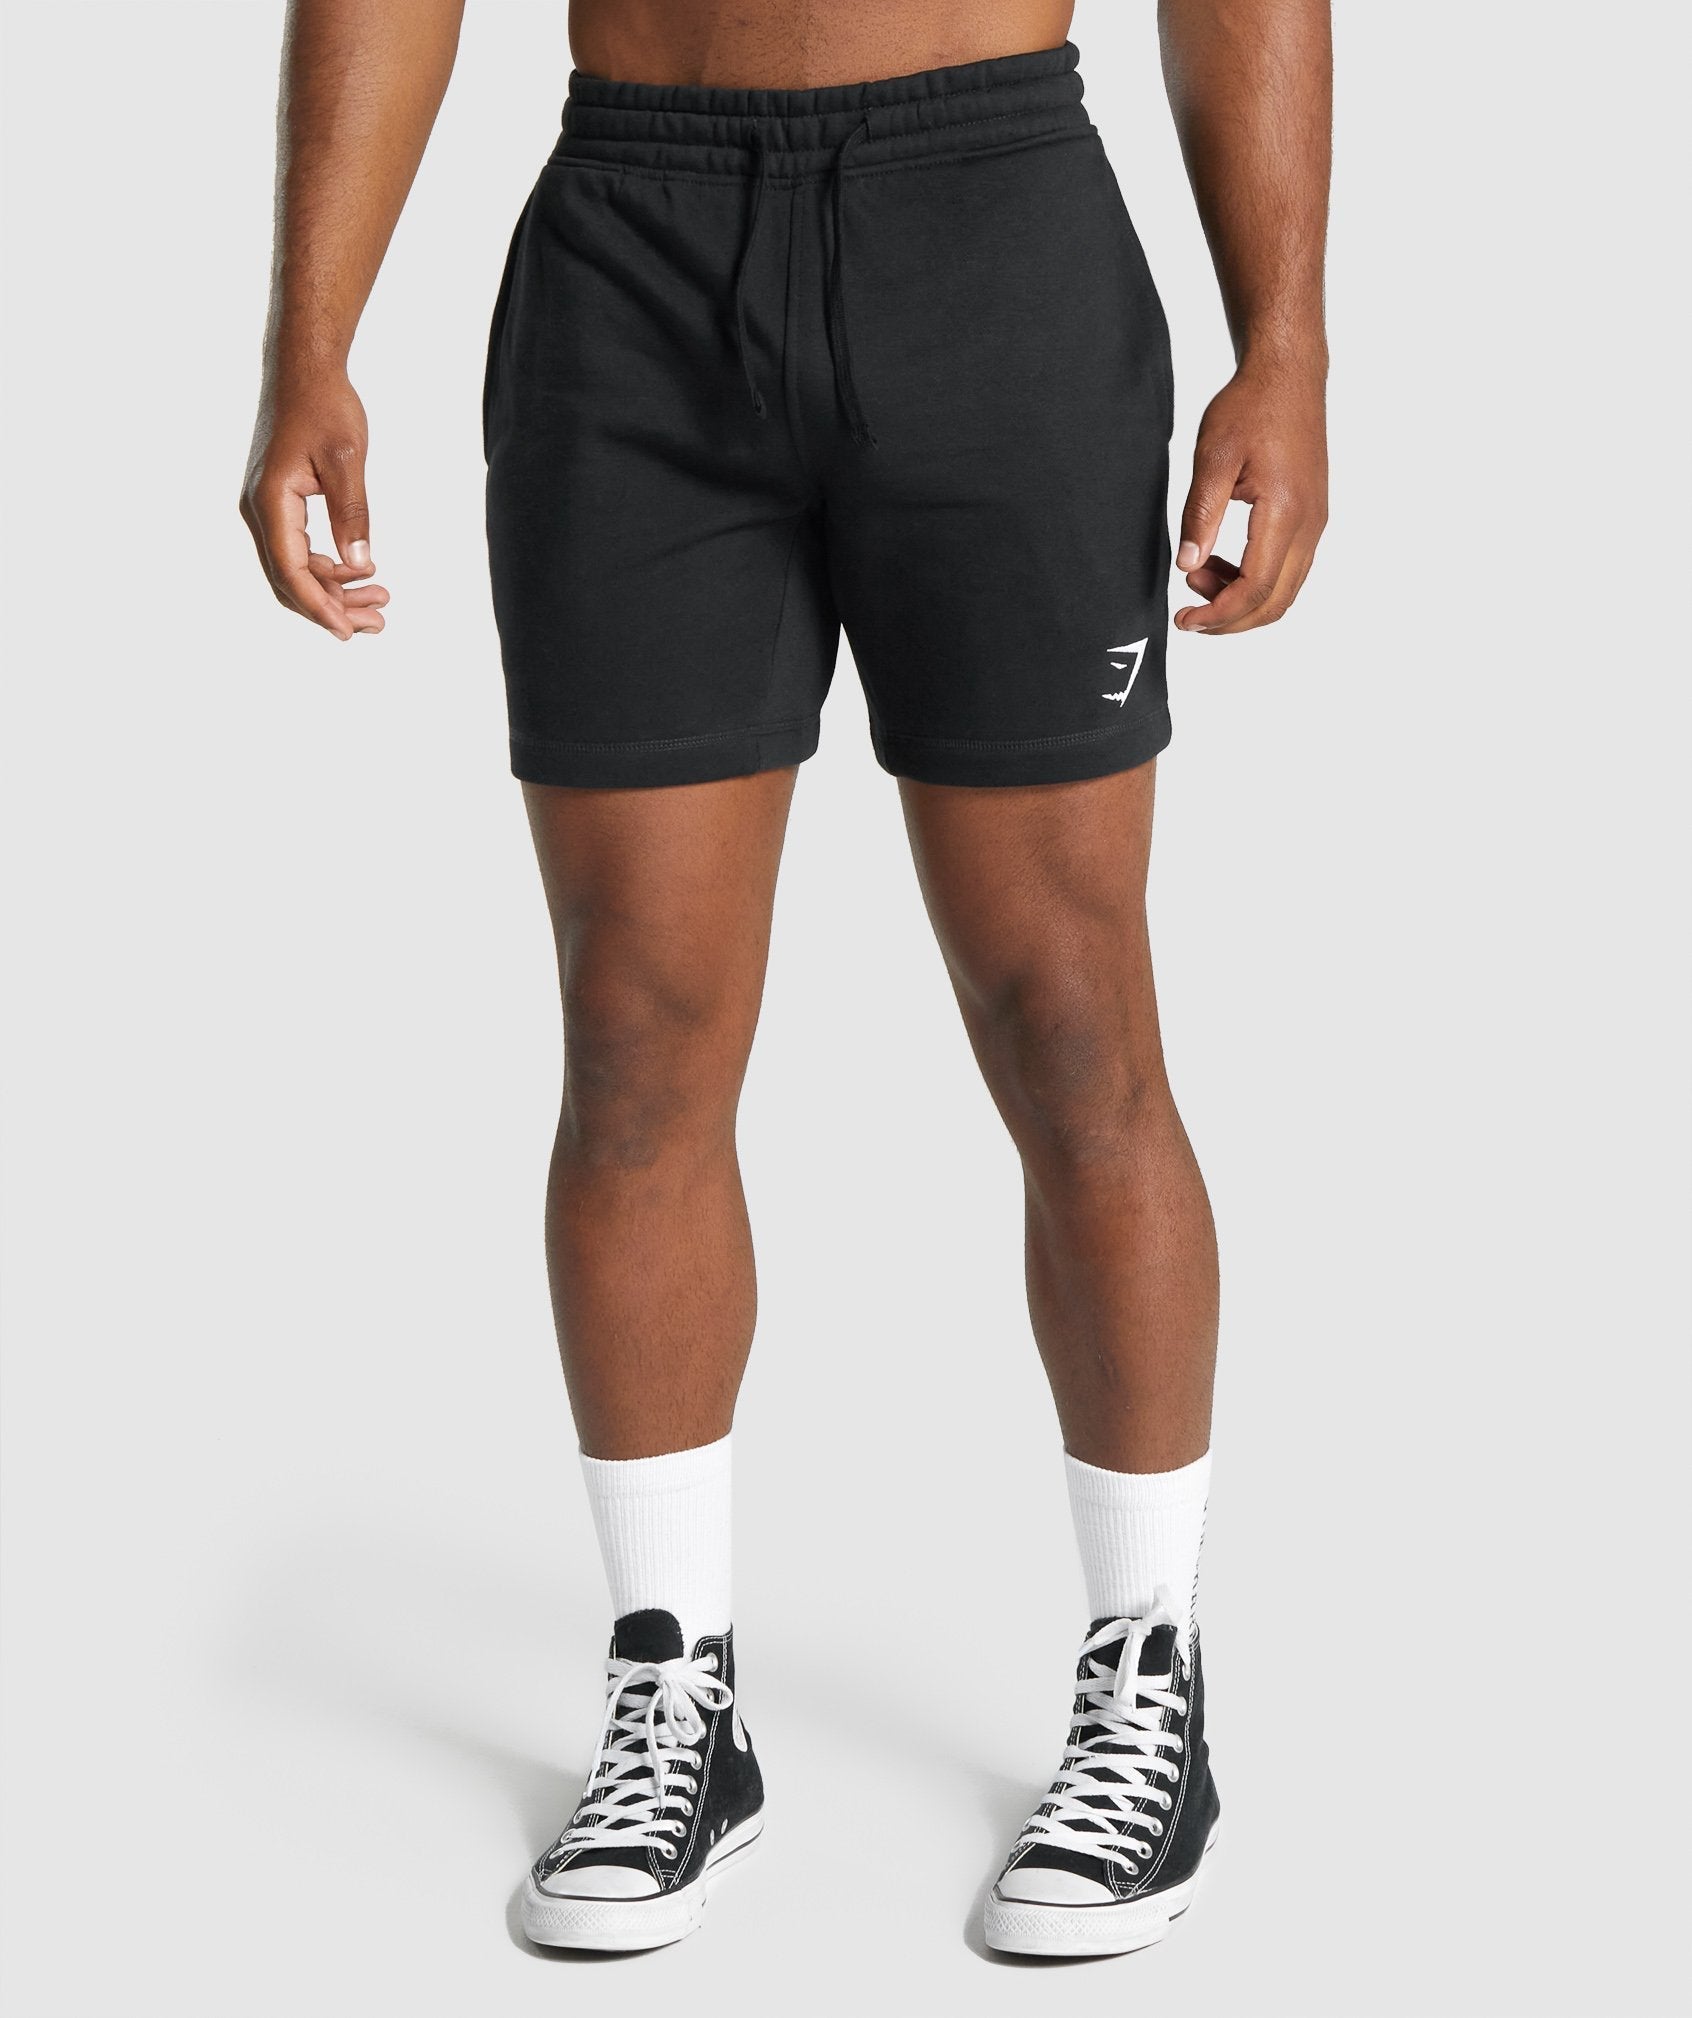 Gymshark 315 1/2 Tight Shorts - Navy